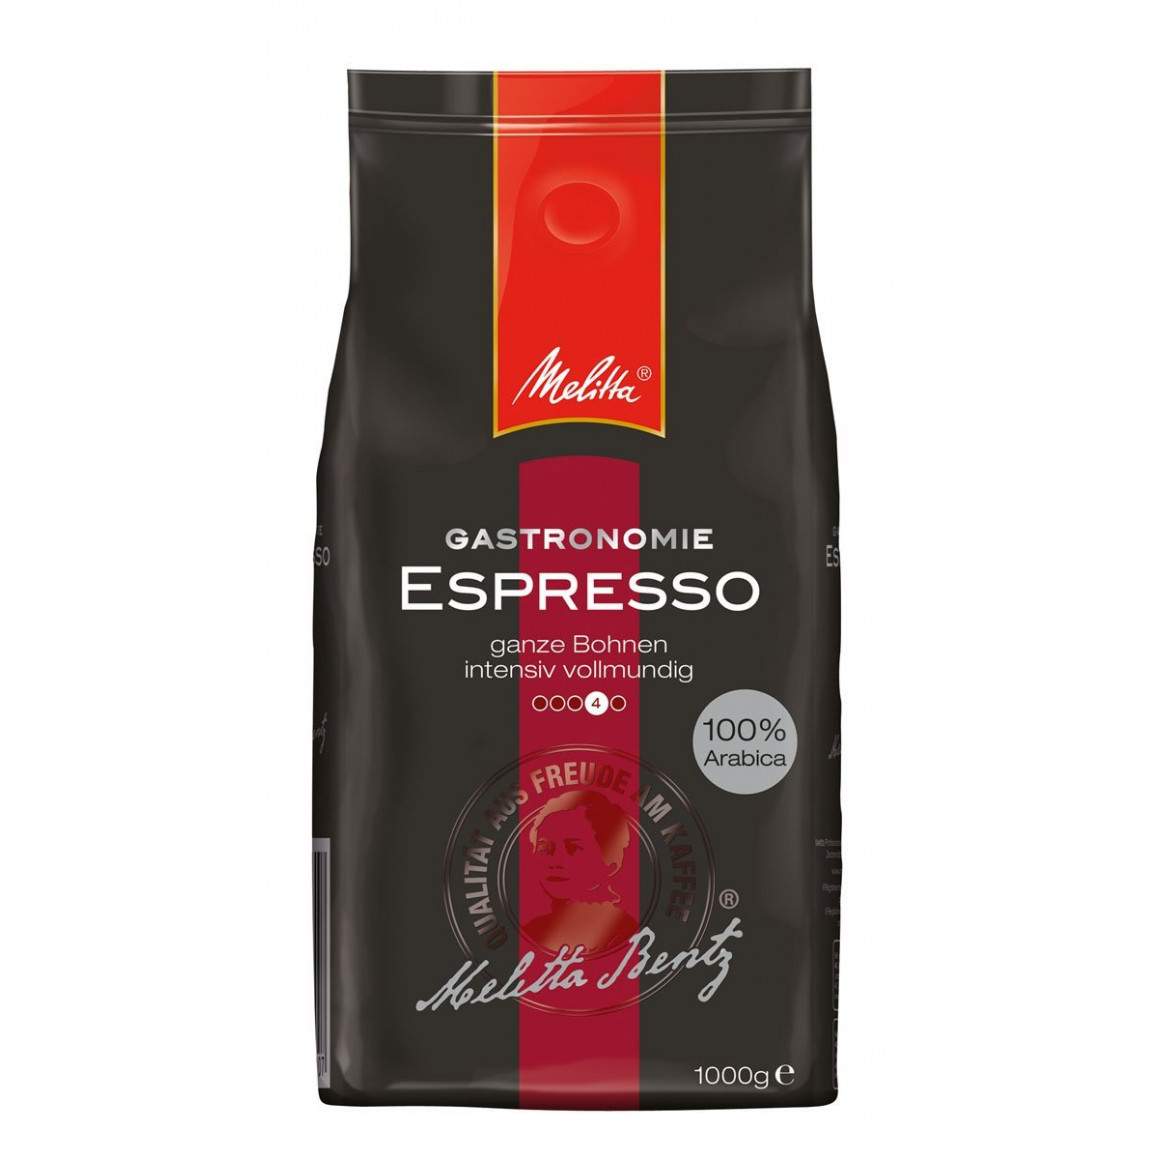 Gastronomy Espresso 1000g